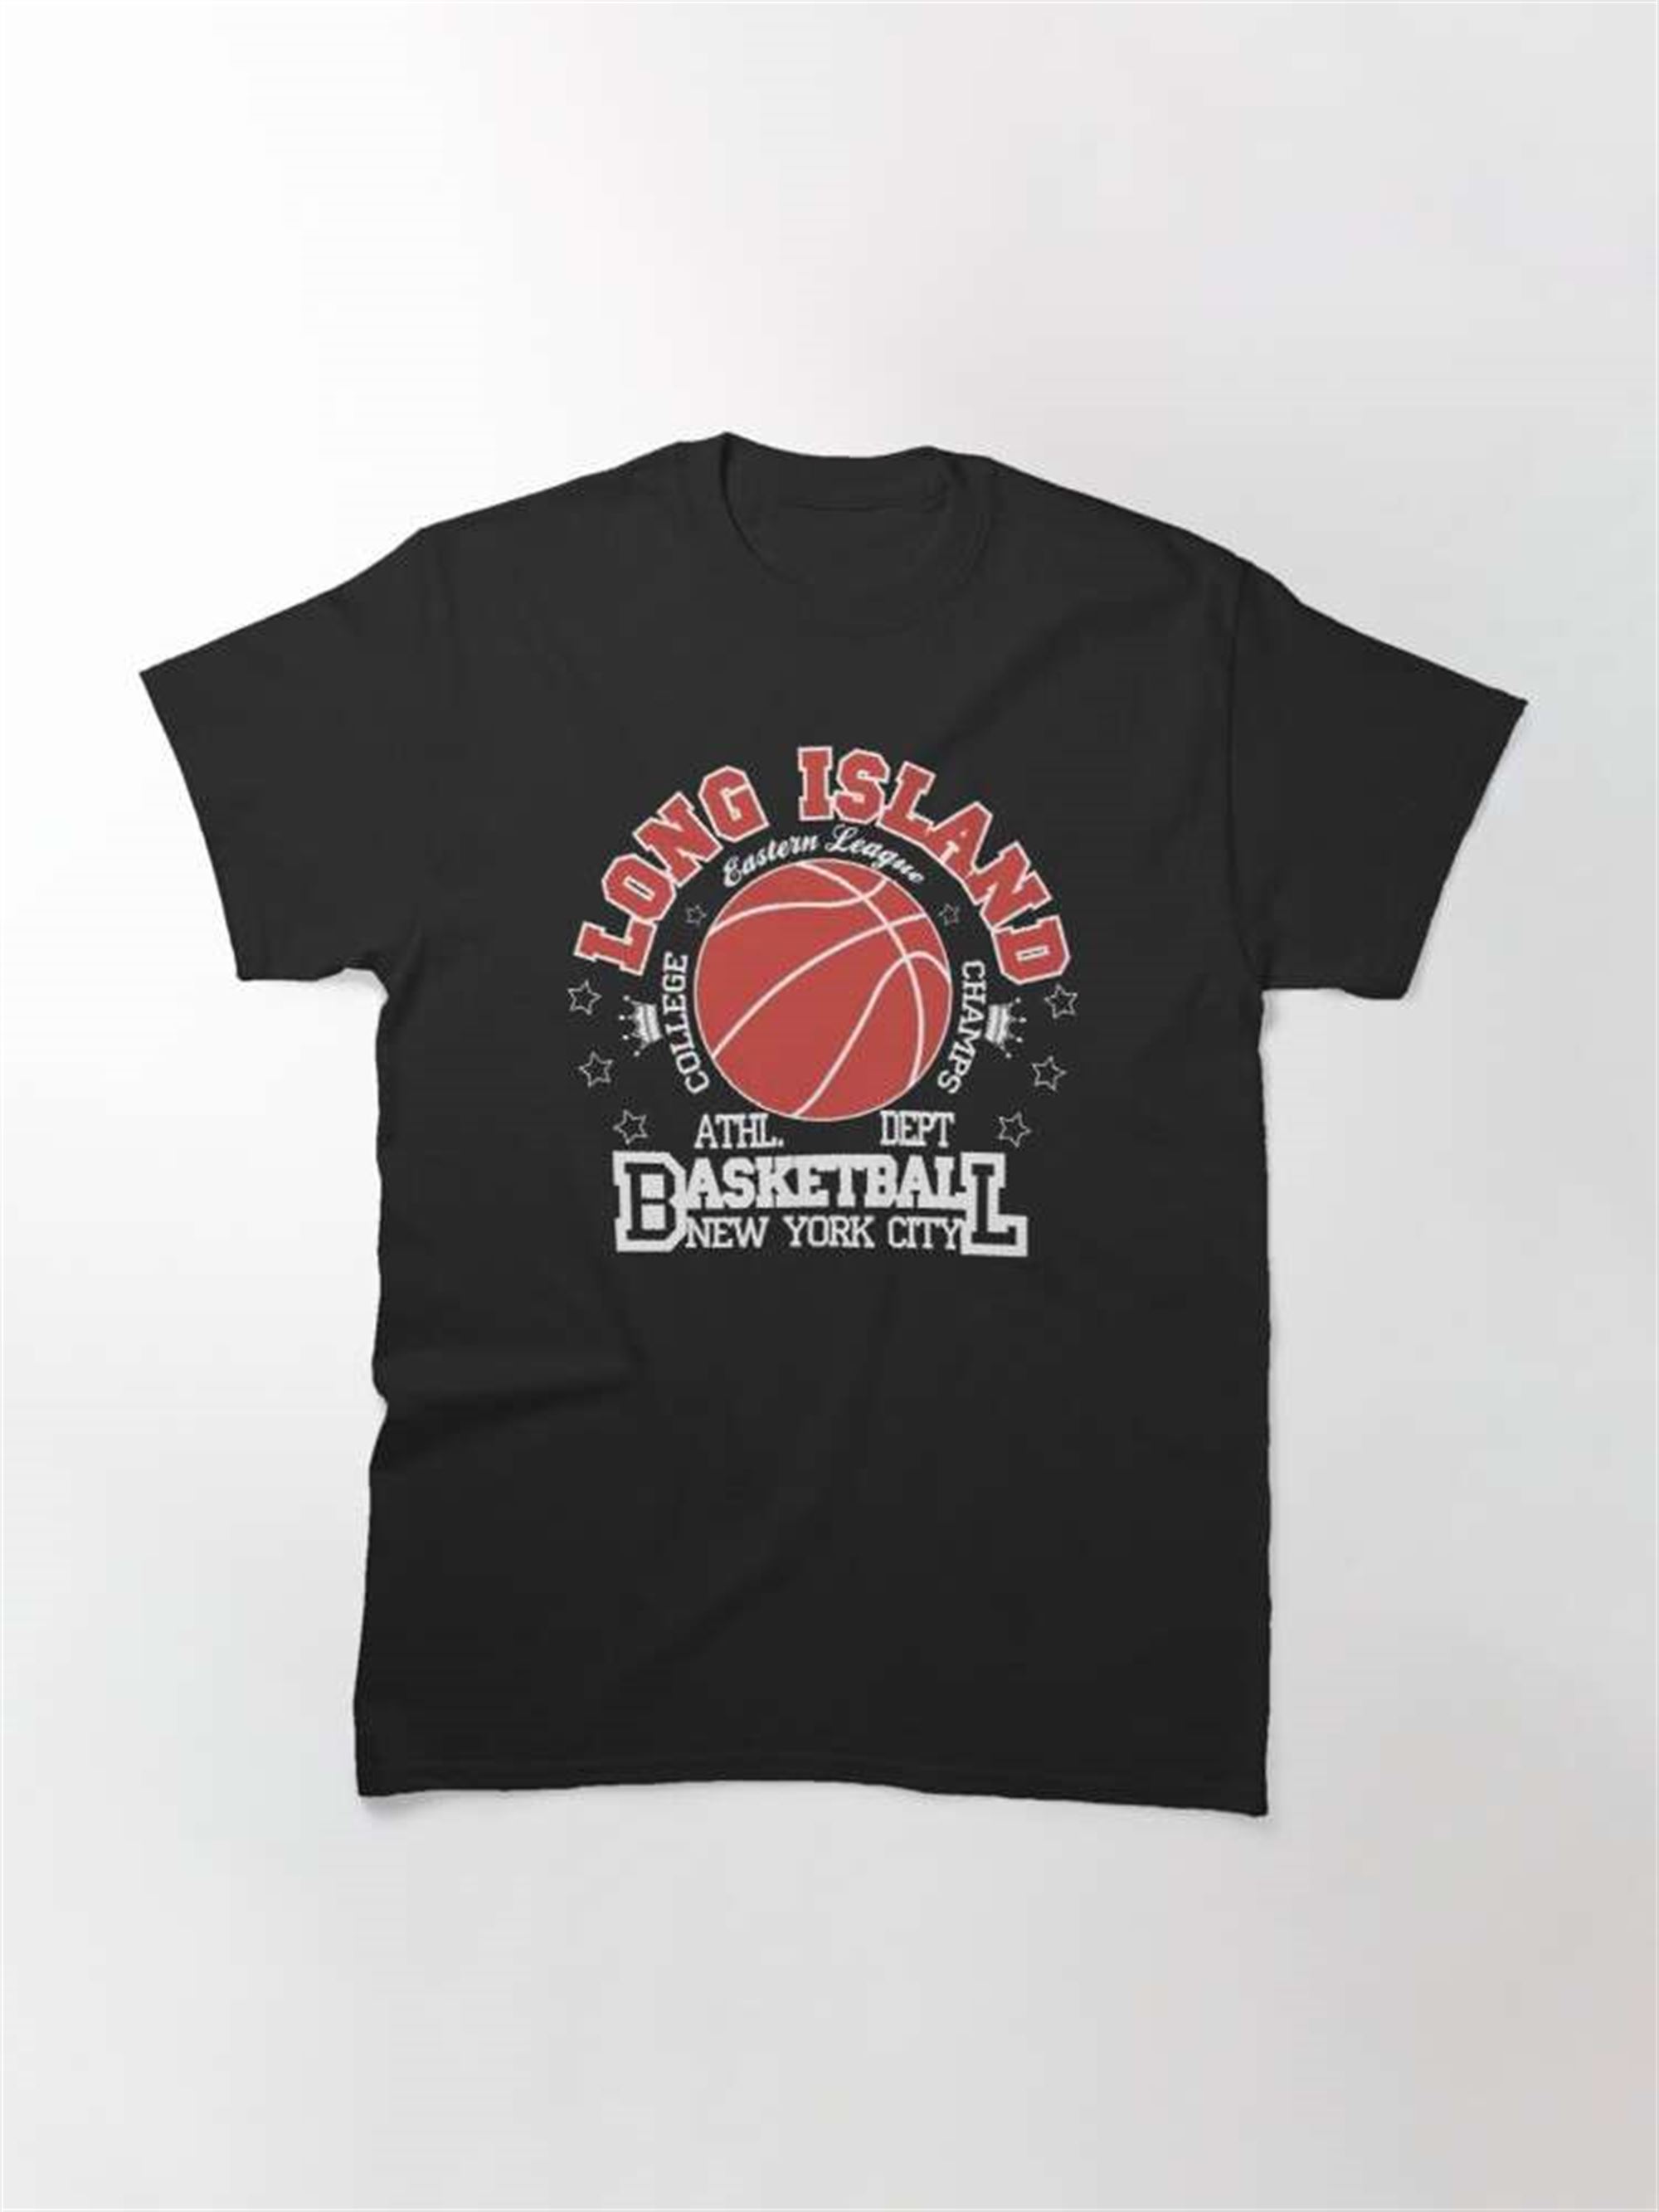 Long Island Basketball Unisex T Shirt Size Up To 5xl